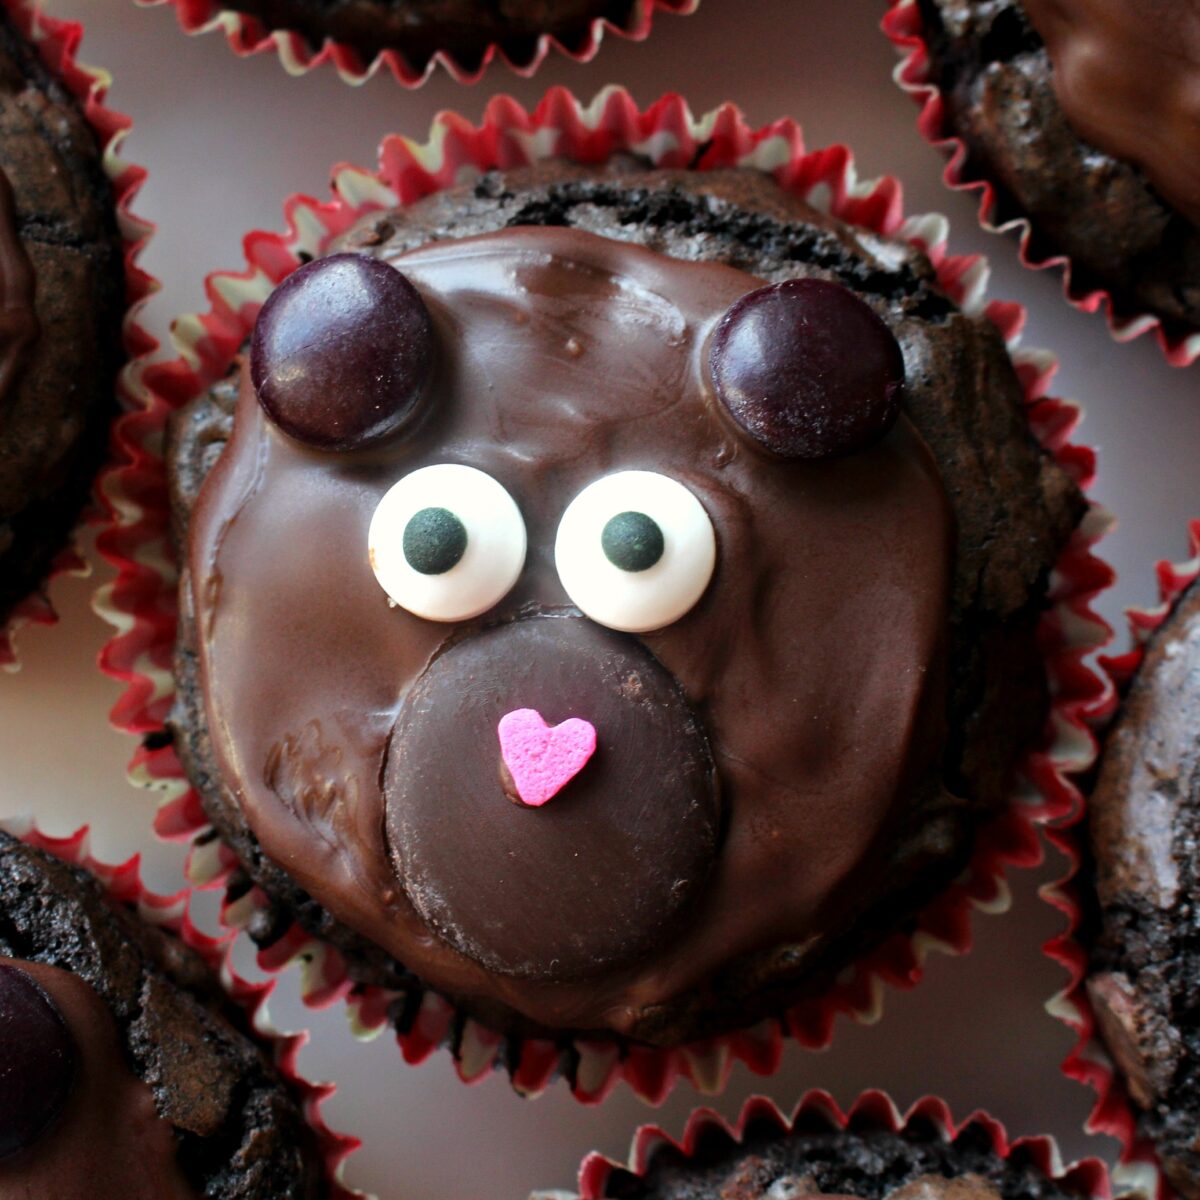 A close up of chocolate brownie cupcake decorated like a bear.